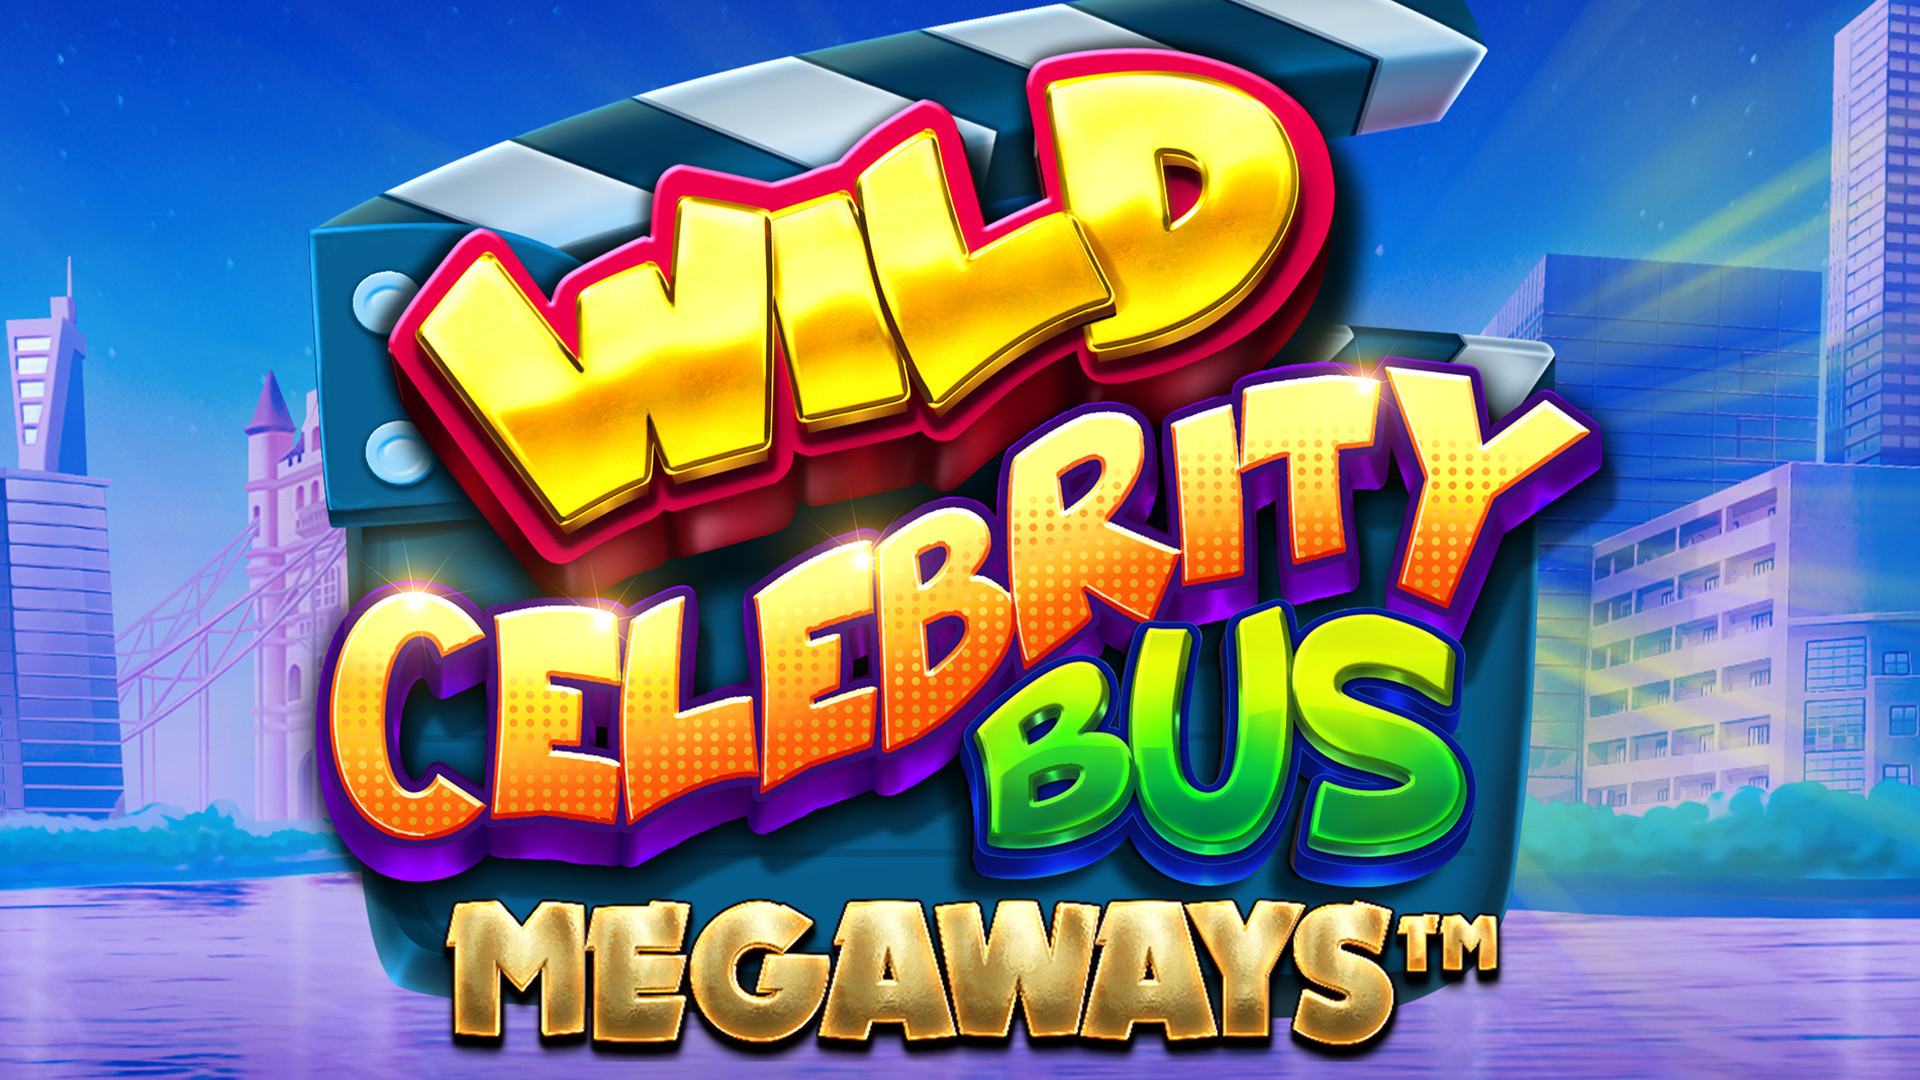 Wild Celebrity Bus MEGAWAYS